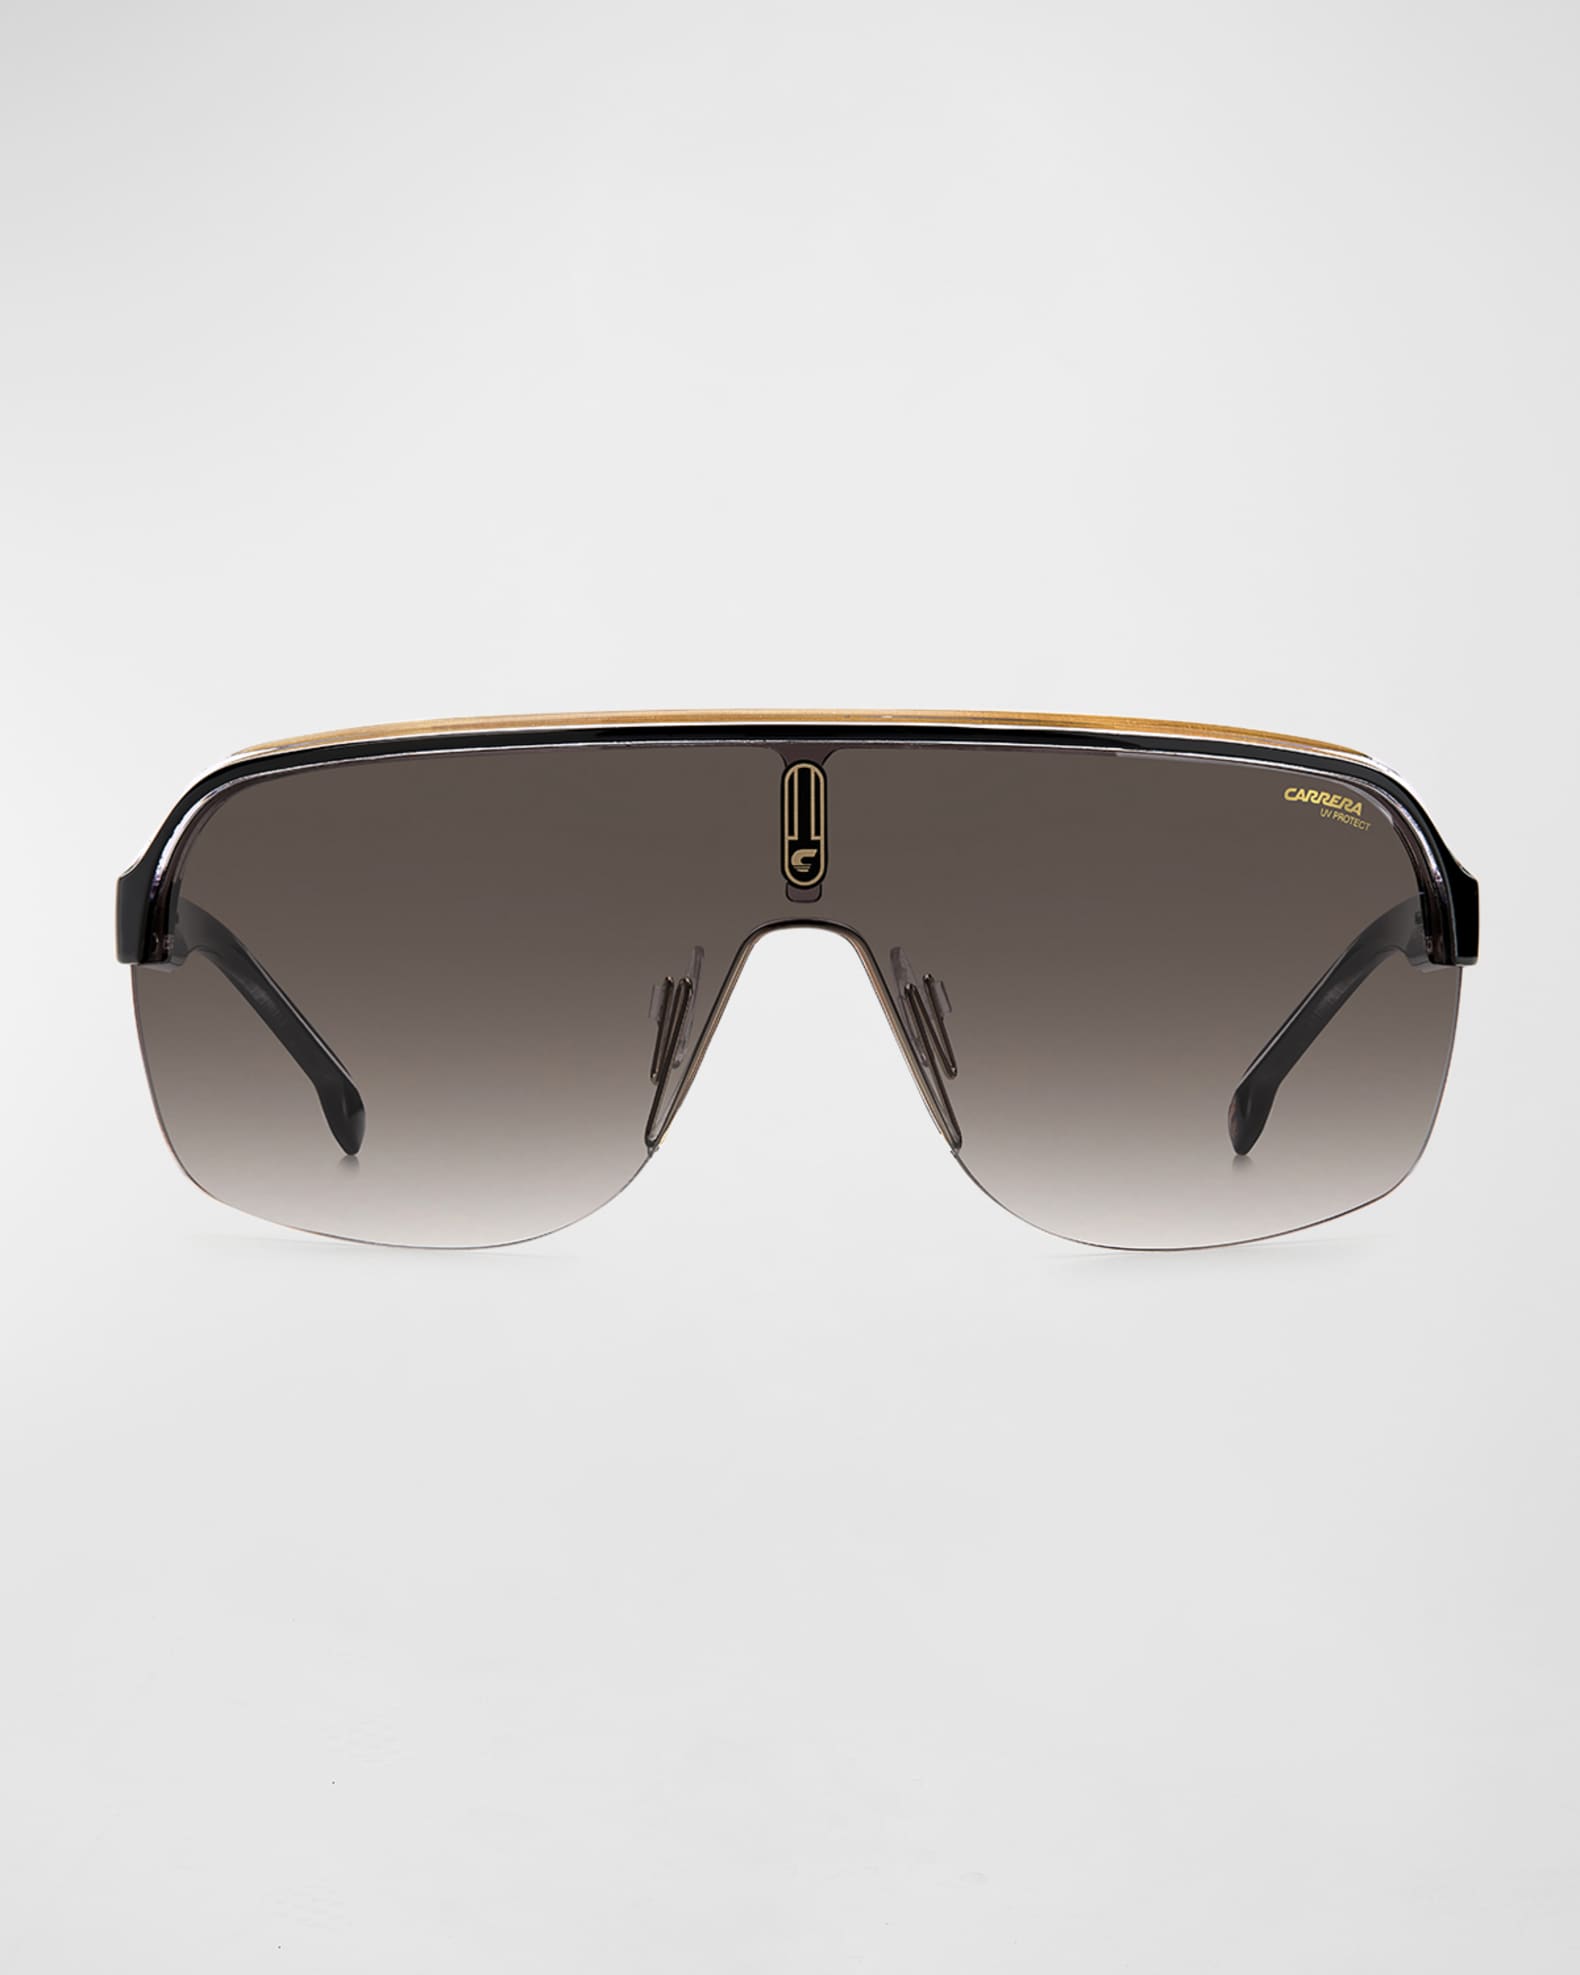 Carrera Men's Topcar 1/N Gradient Shield Sunglasses | Neiman Marcus